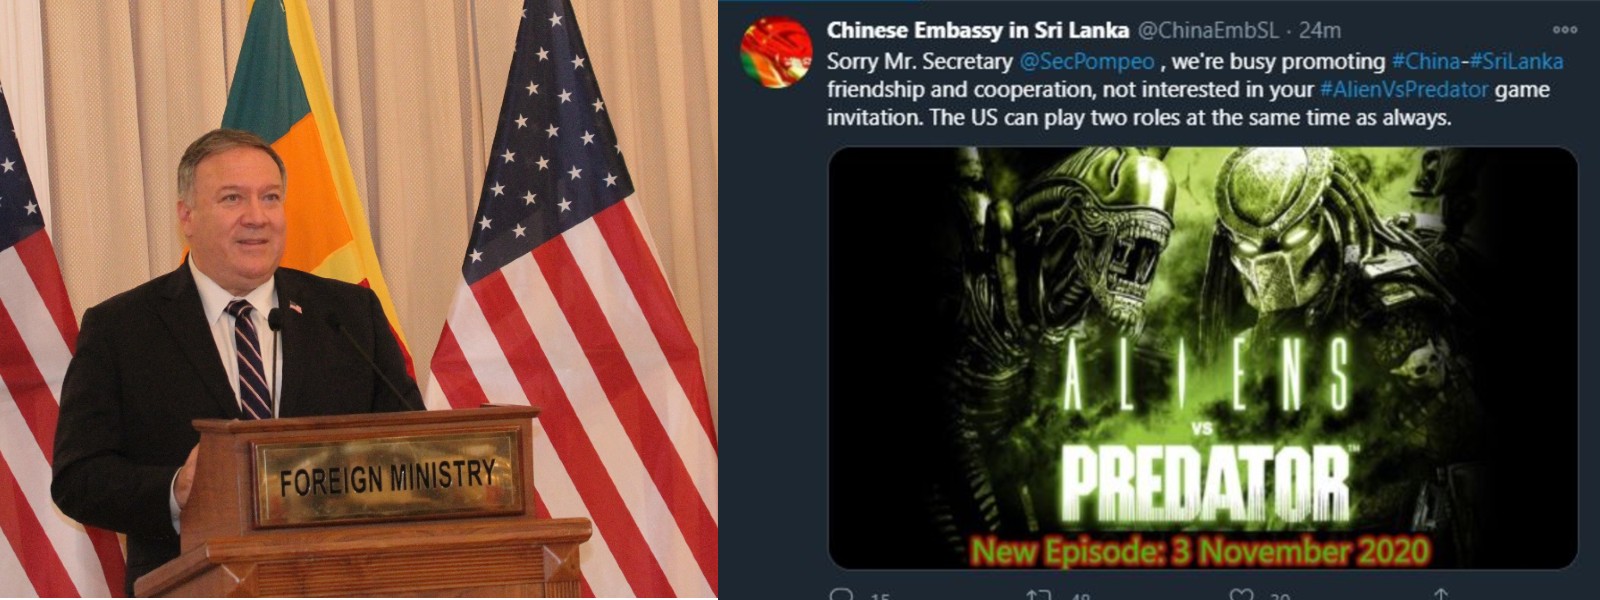 'AlienVsPredator' - China responds to US